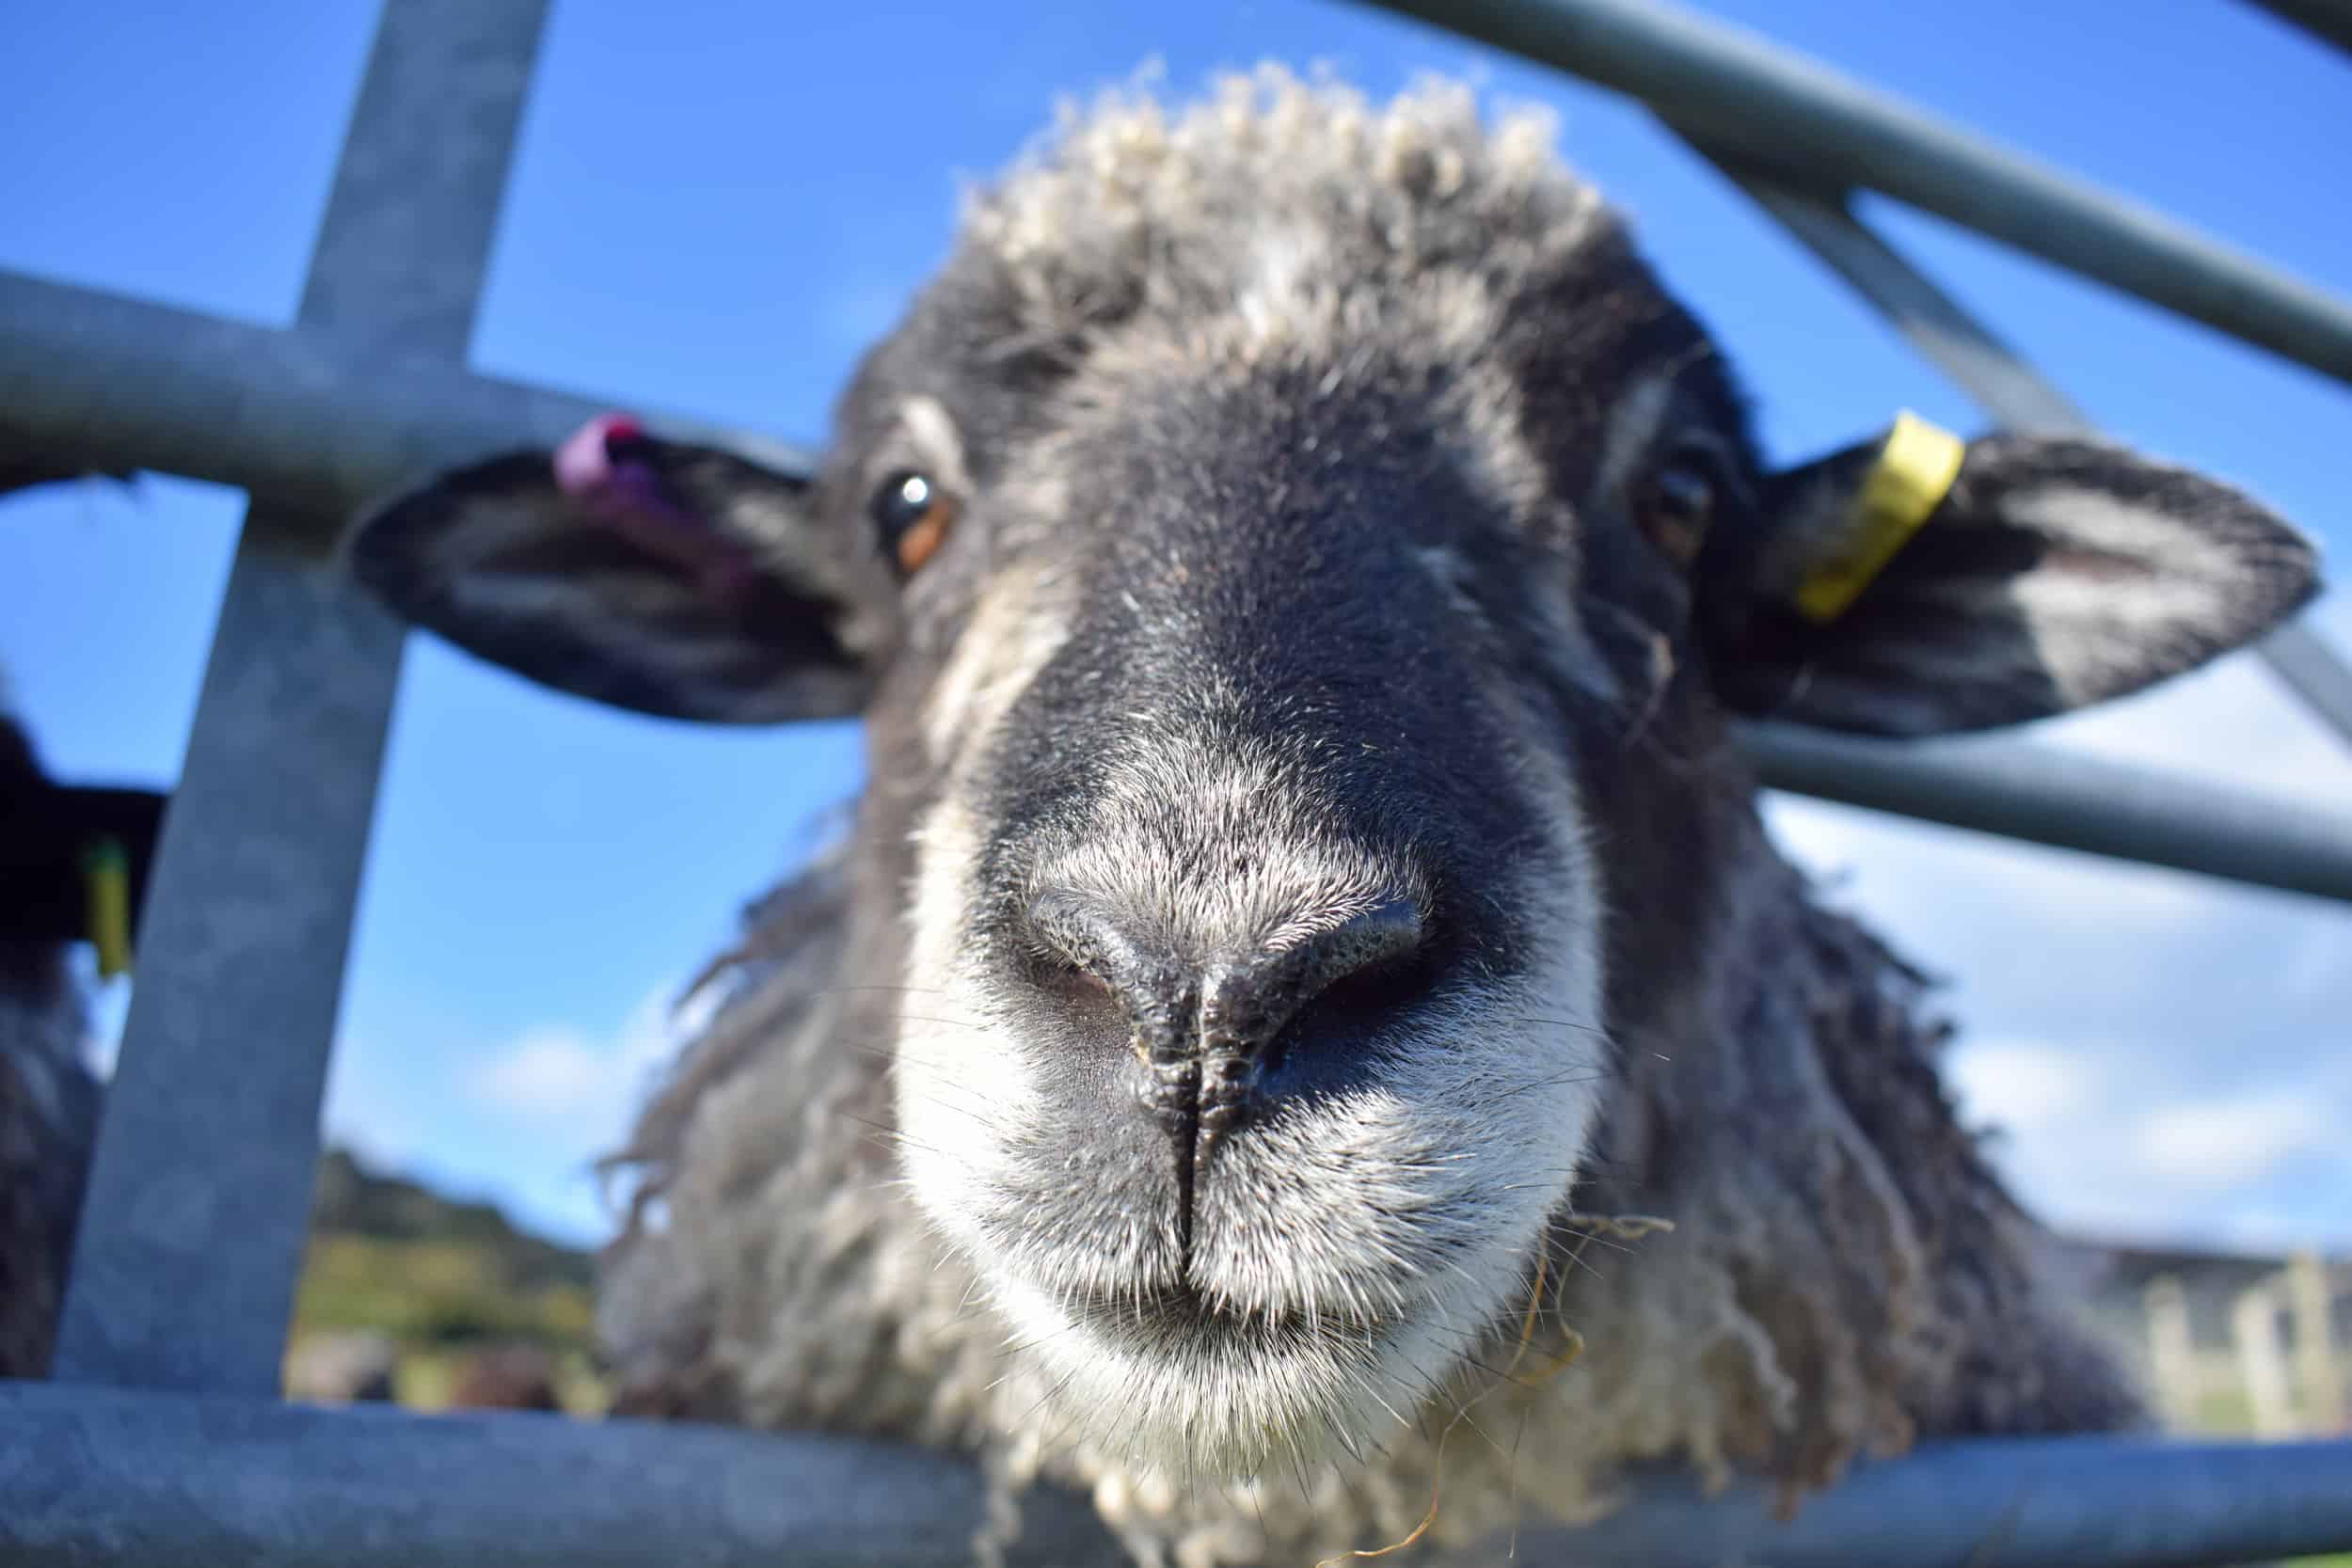 Jemima sheep farm animals coloured leicester longwool gotland sheep shetland ewe lamb kind fibre british wool grey close up